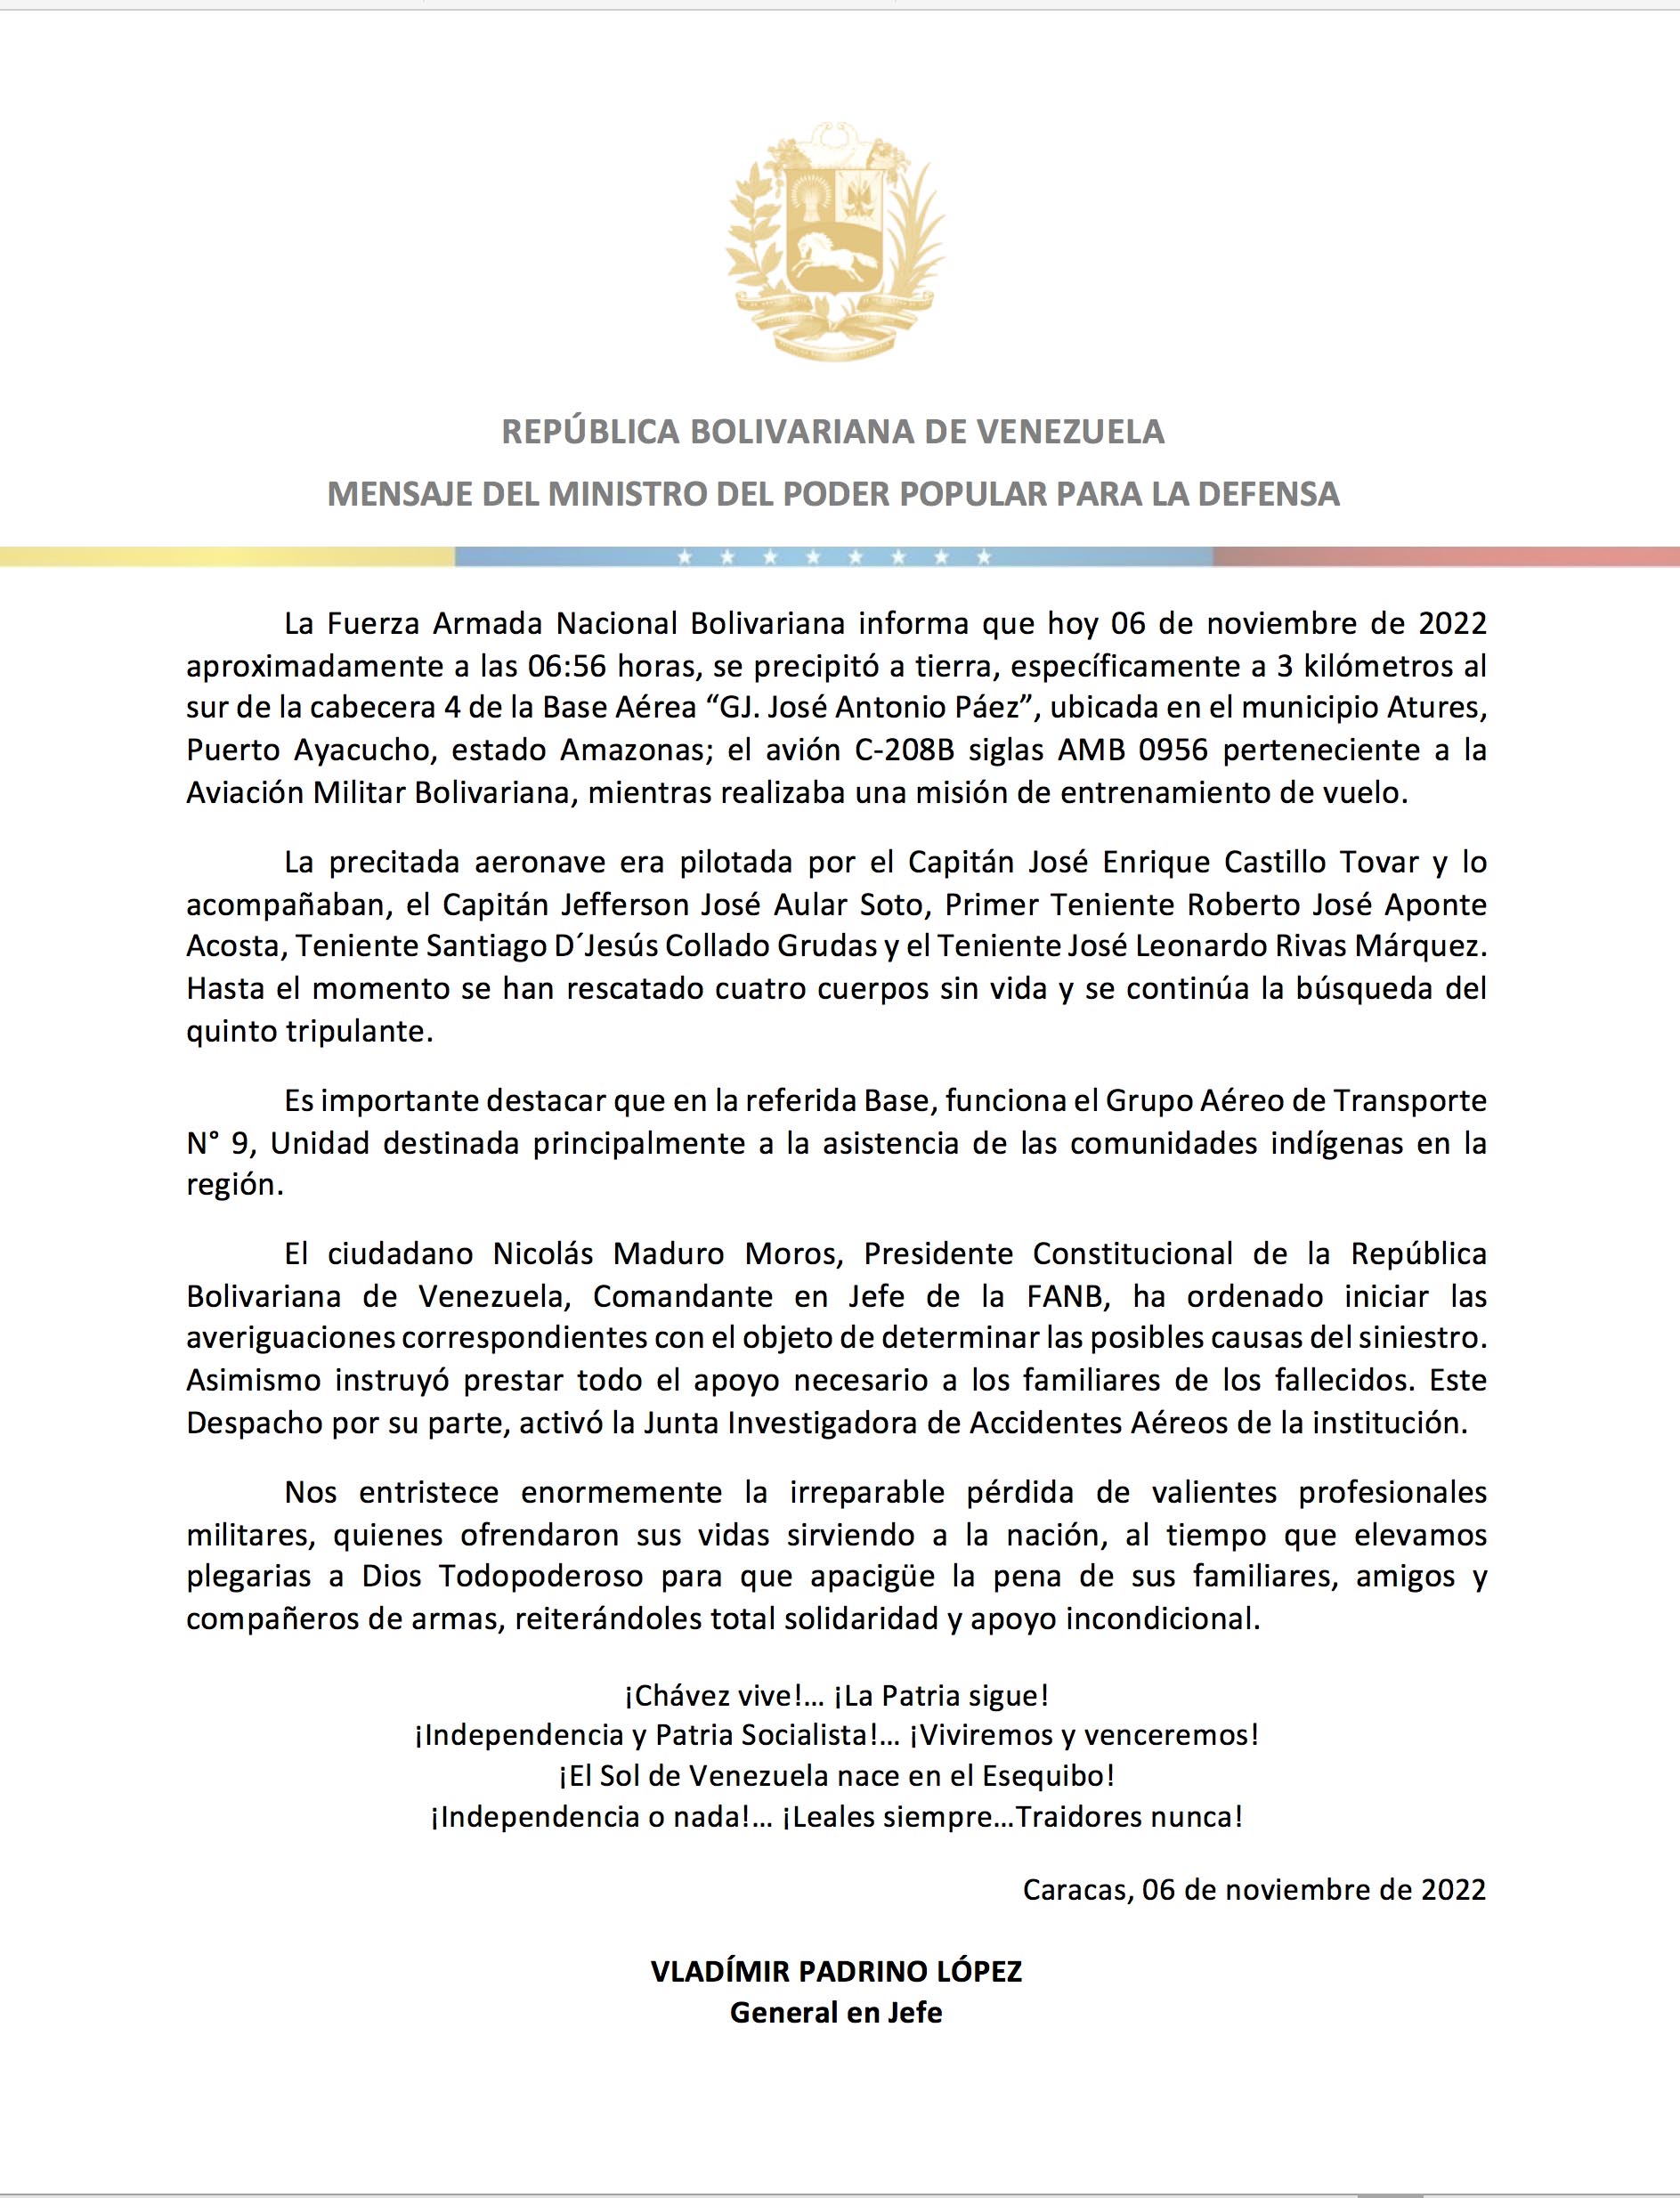 El comunicado de la Fuerza Armada Nacional Bolivariana (Twitter)